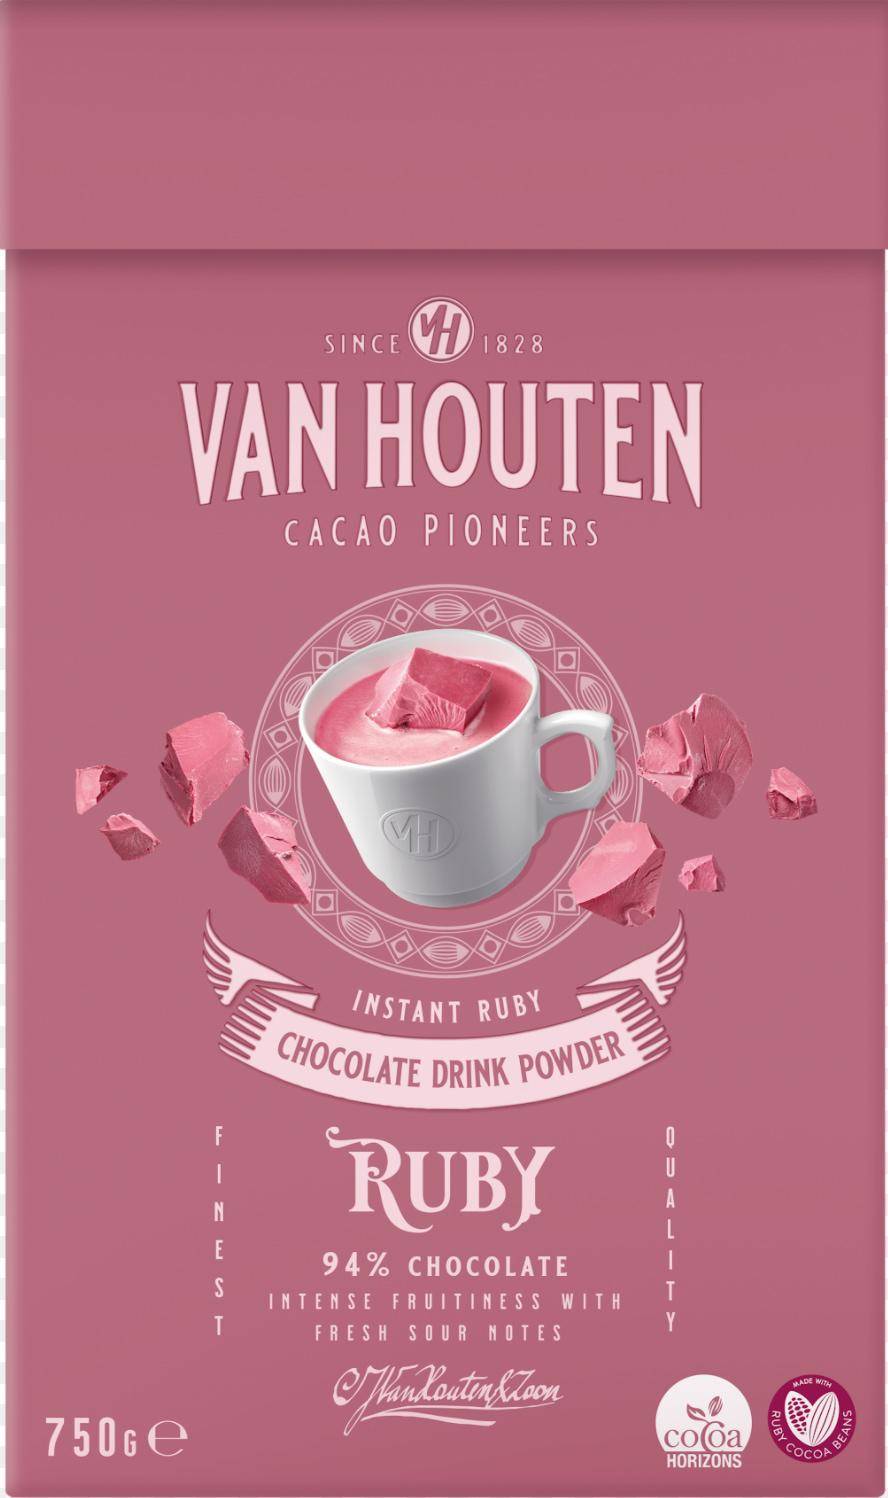 Van Houten_Chocolate Drink Powder_Ruby_Horeca